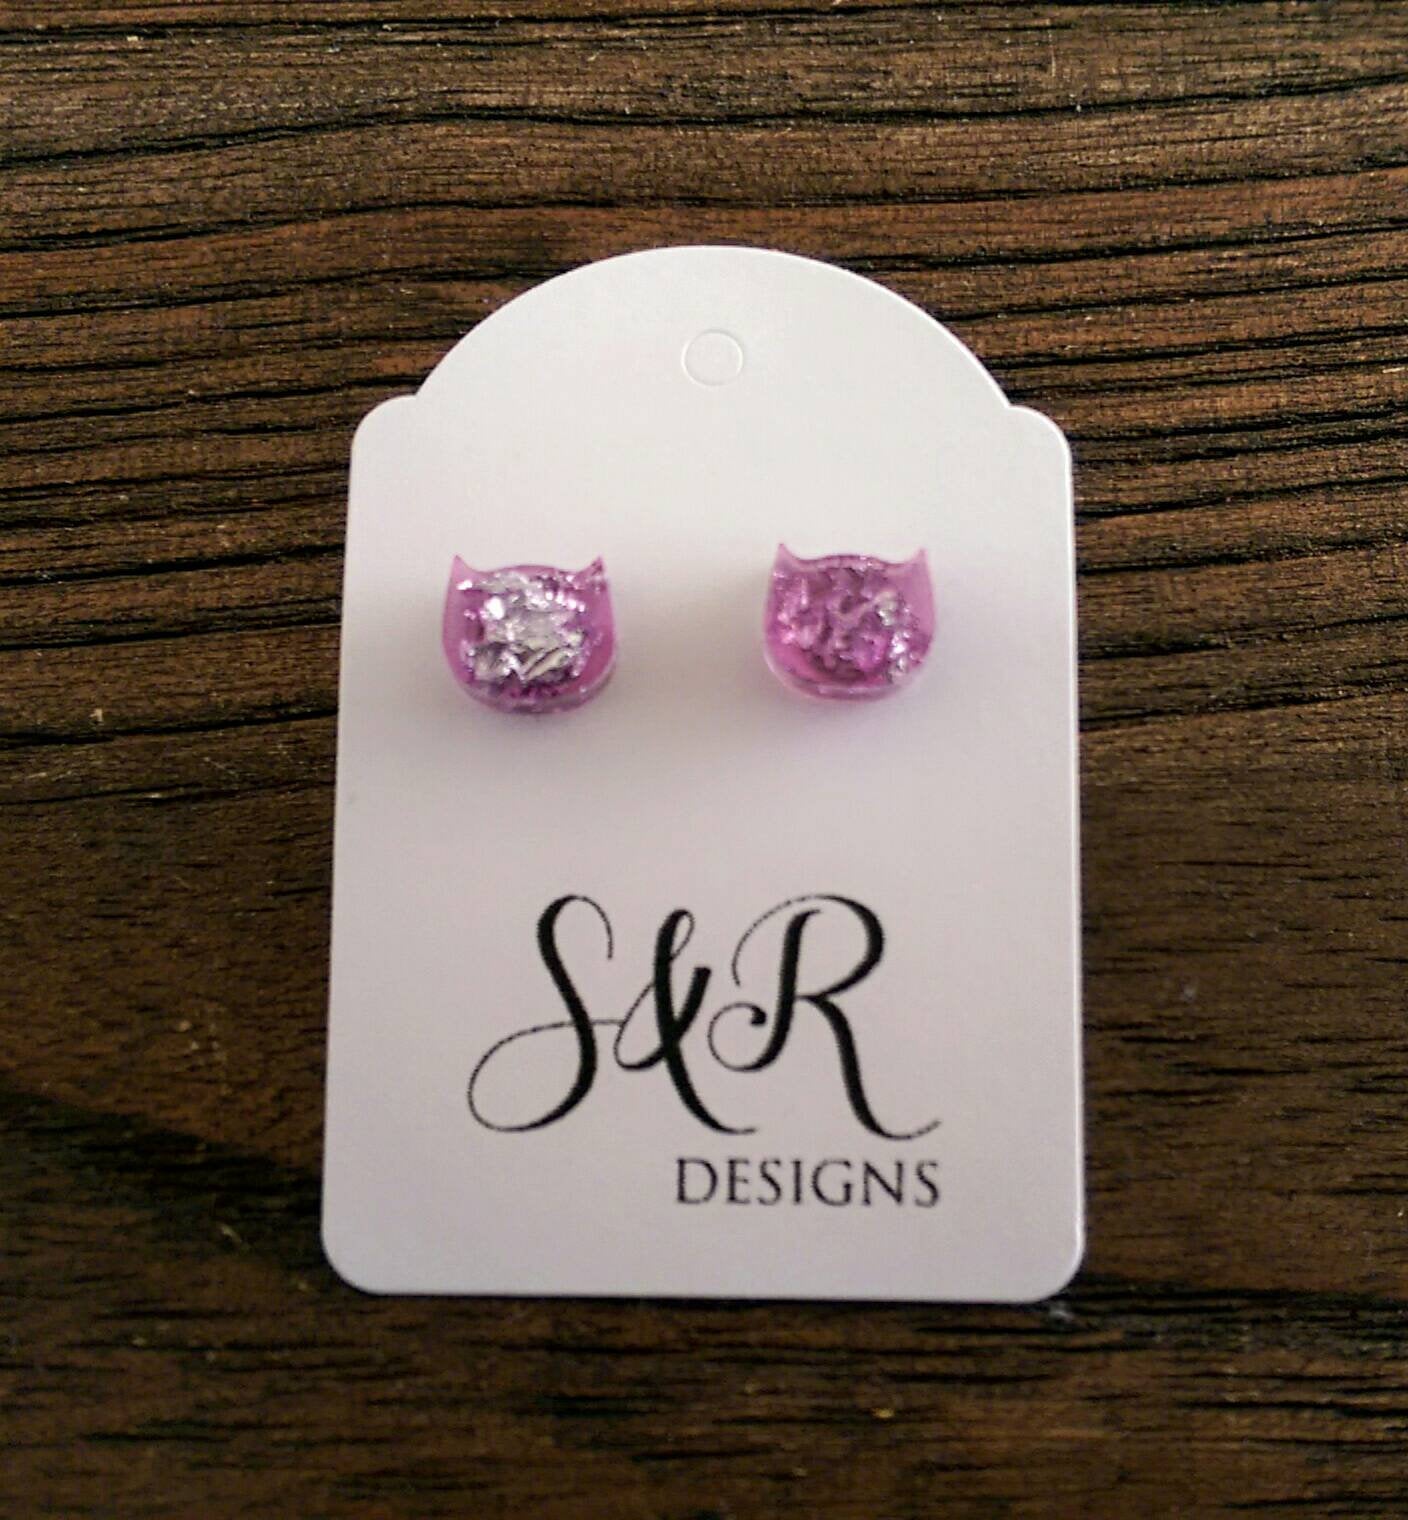 Cat Resin Stud Earrings, Leaf Earrings, Light Pink Silver Leaf Earrings made with Stainless Steel.